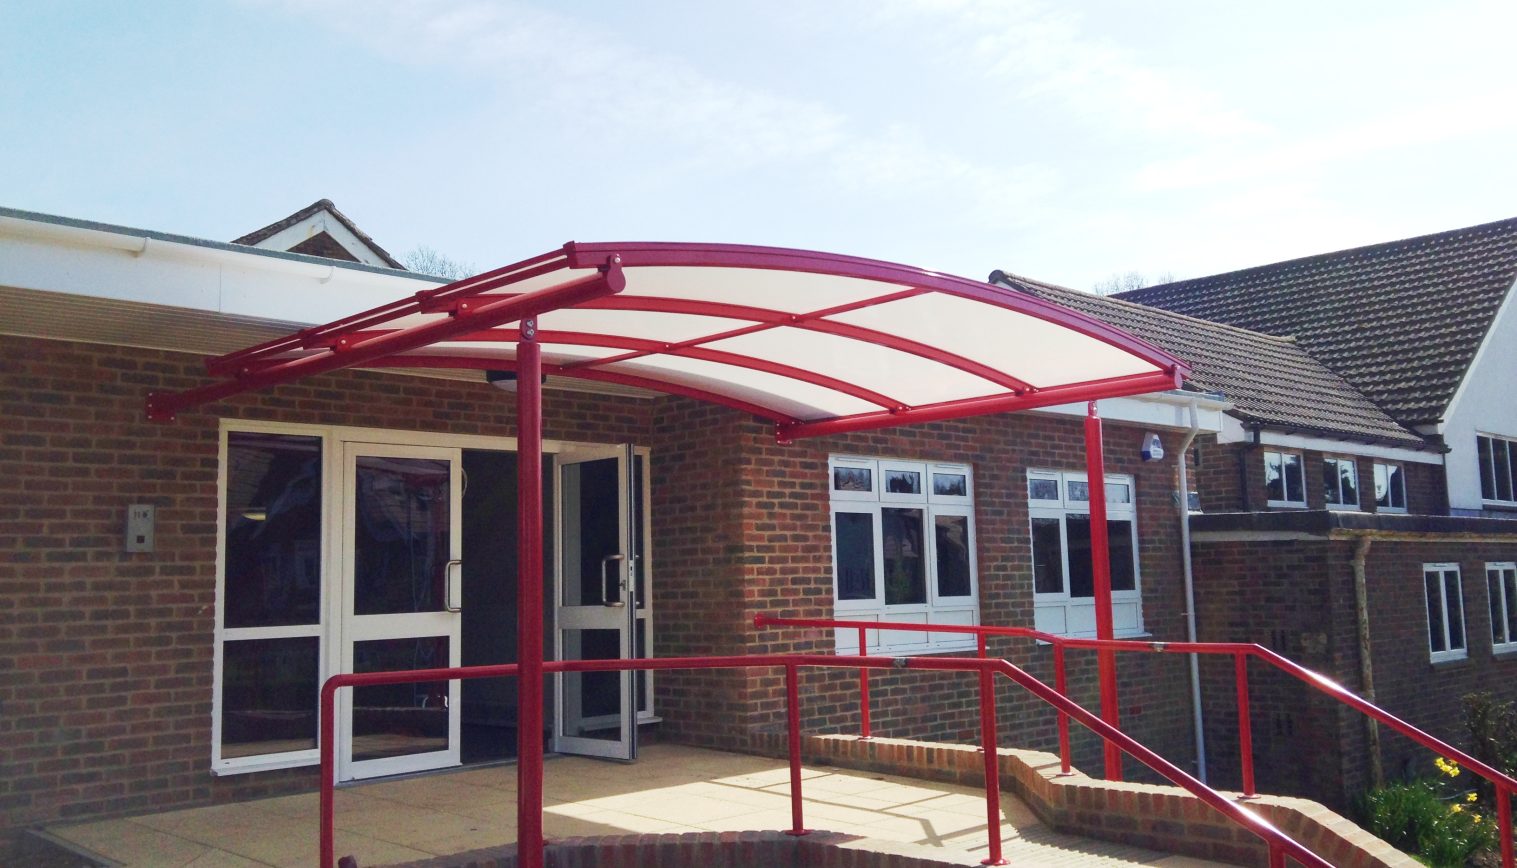 Sir Henry Fermor CE Primary School – Entrance Canopy